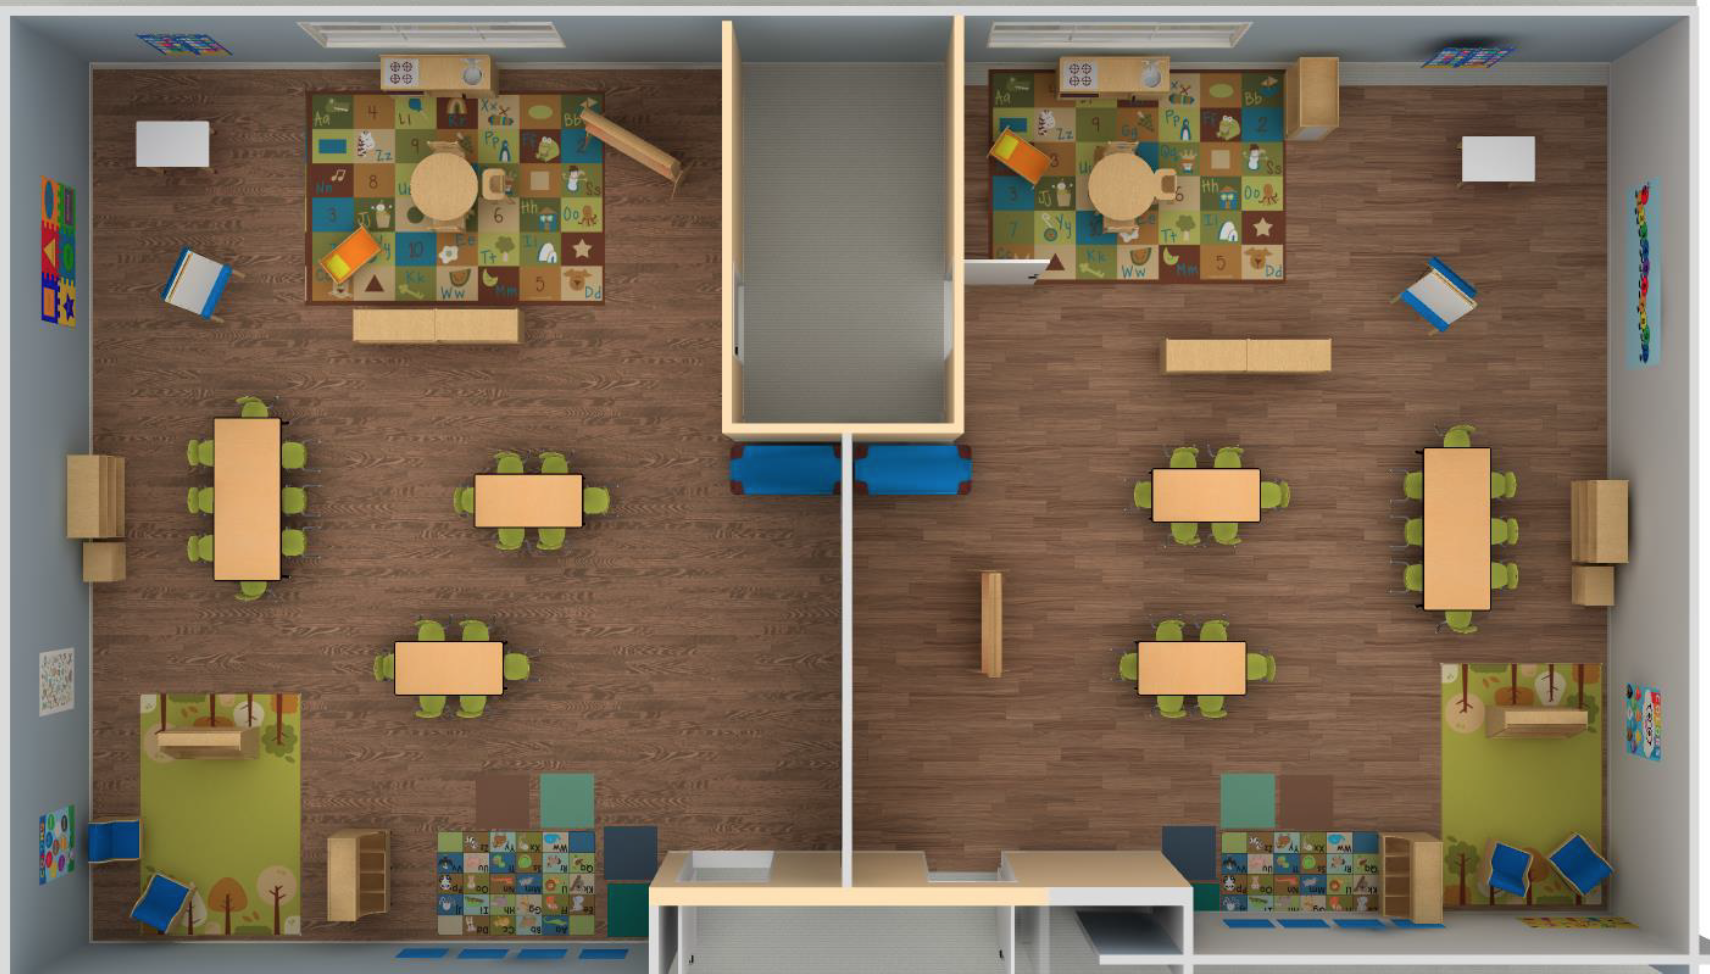 rendering, classroom interior